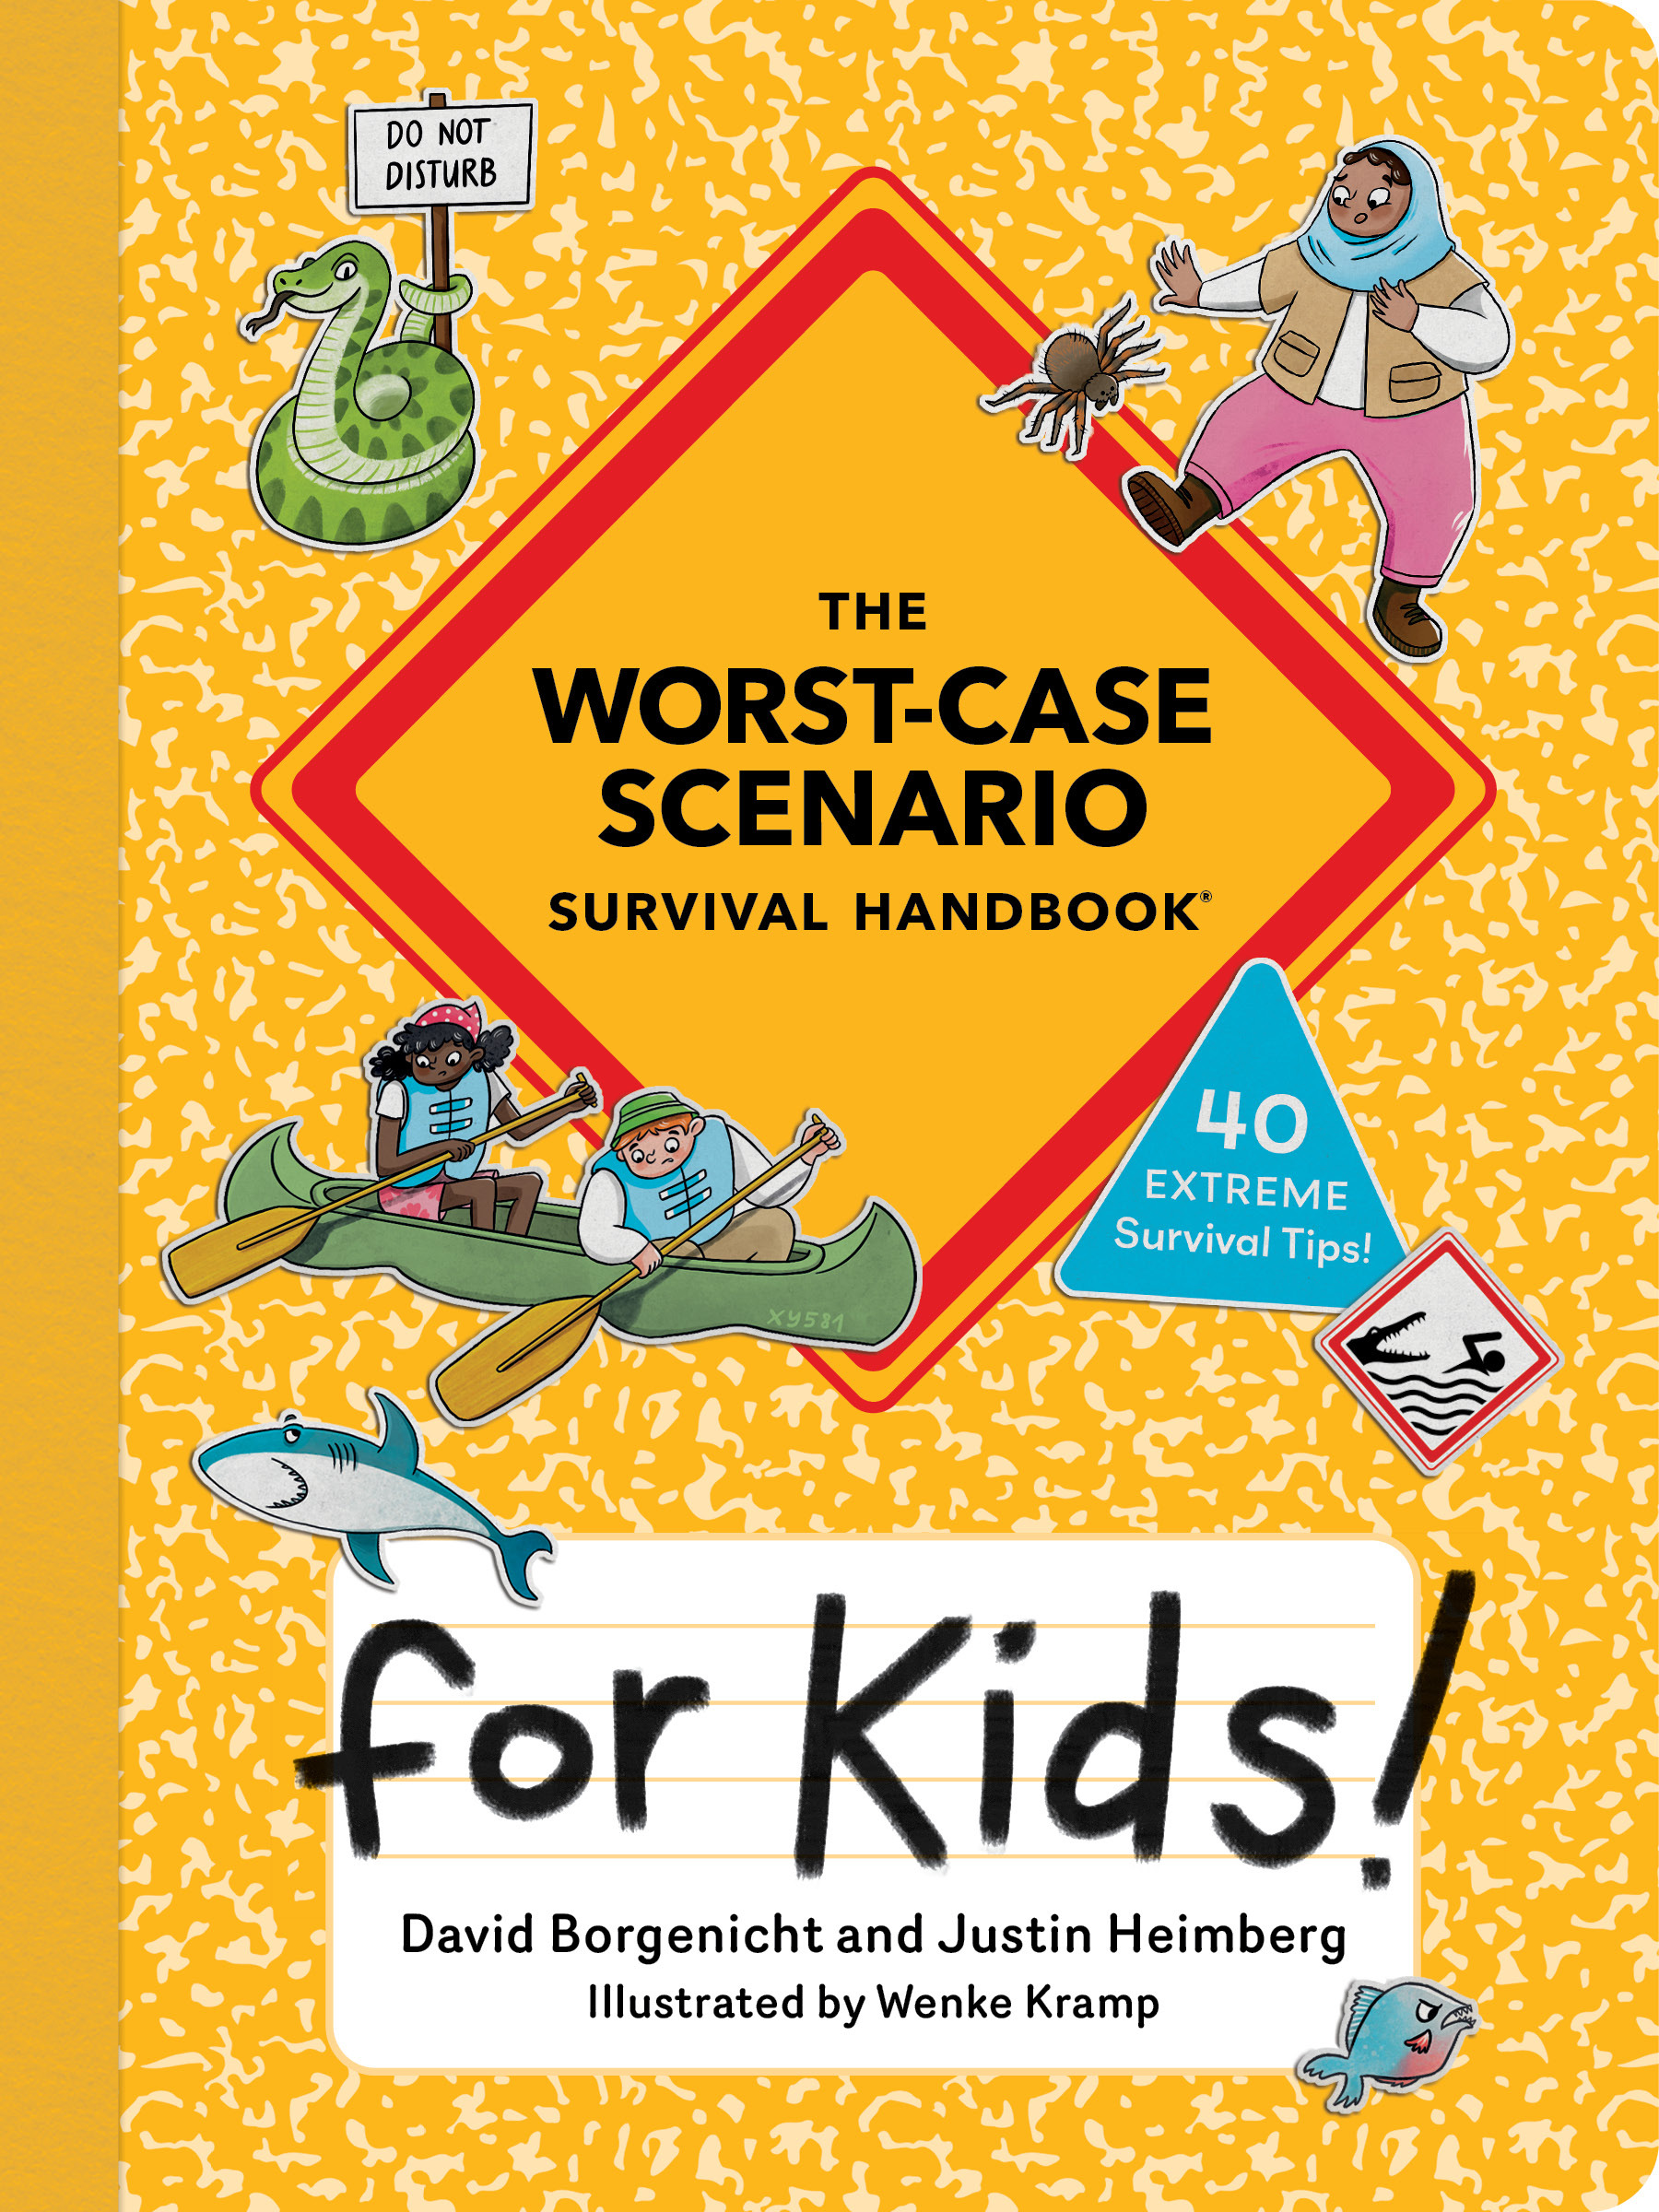 The Worst-Case Scenario Survival Handbook for Kids